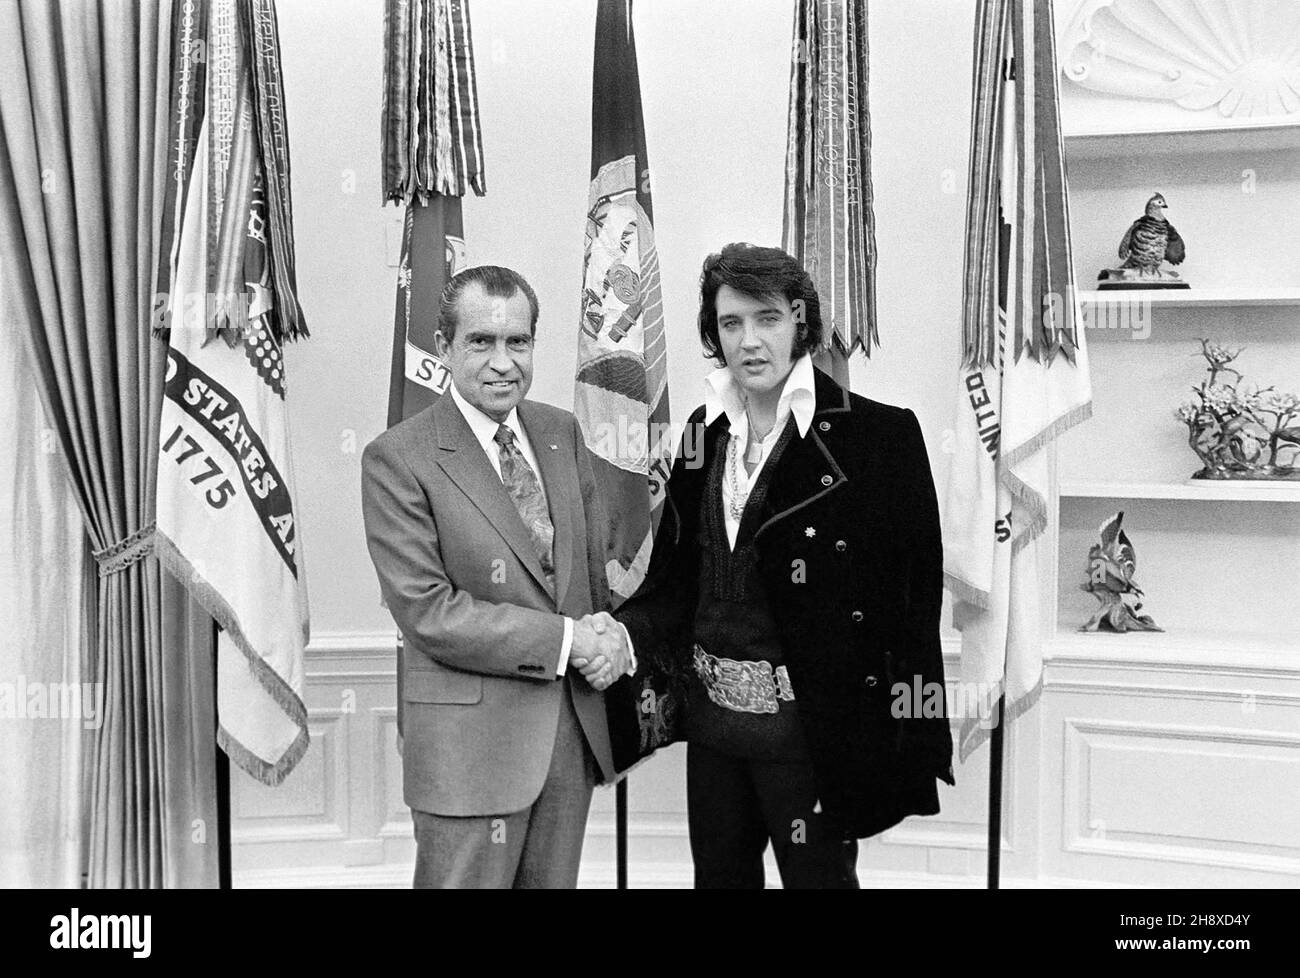 Elvis Presley meeting with U.S. President Richard M. Nixon at White House, Washington, D.C., USA, White House Photo Office, December 21, 1970 Stock Photo